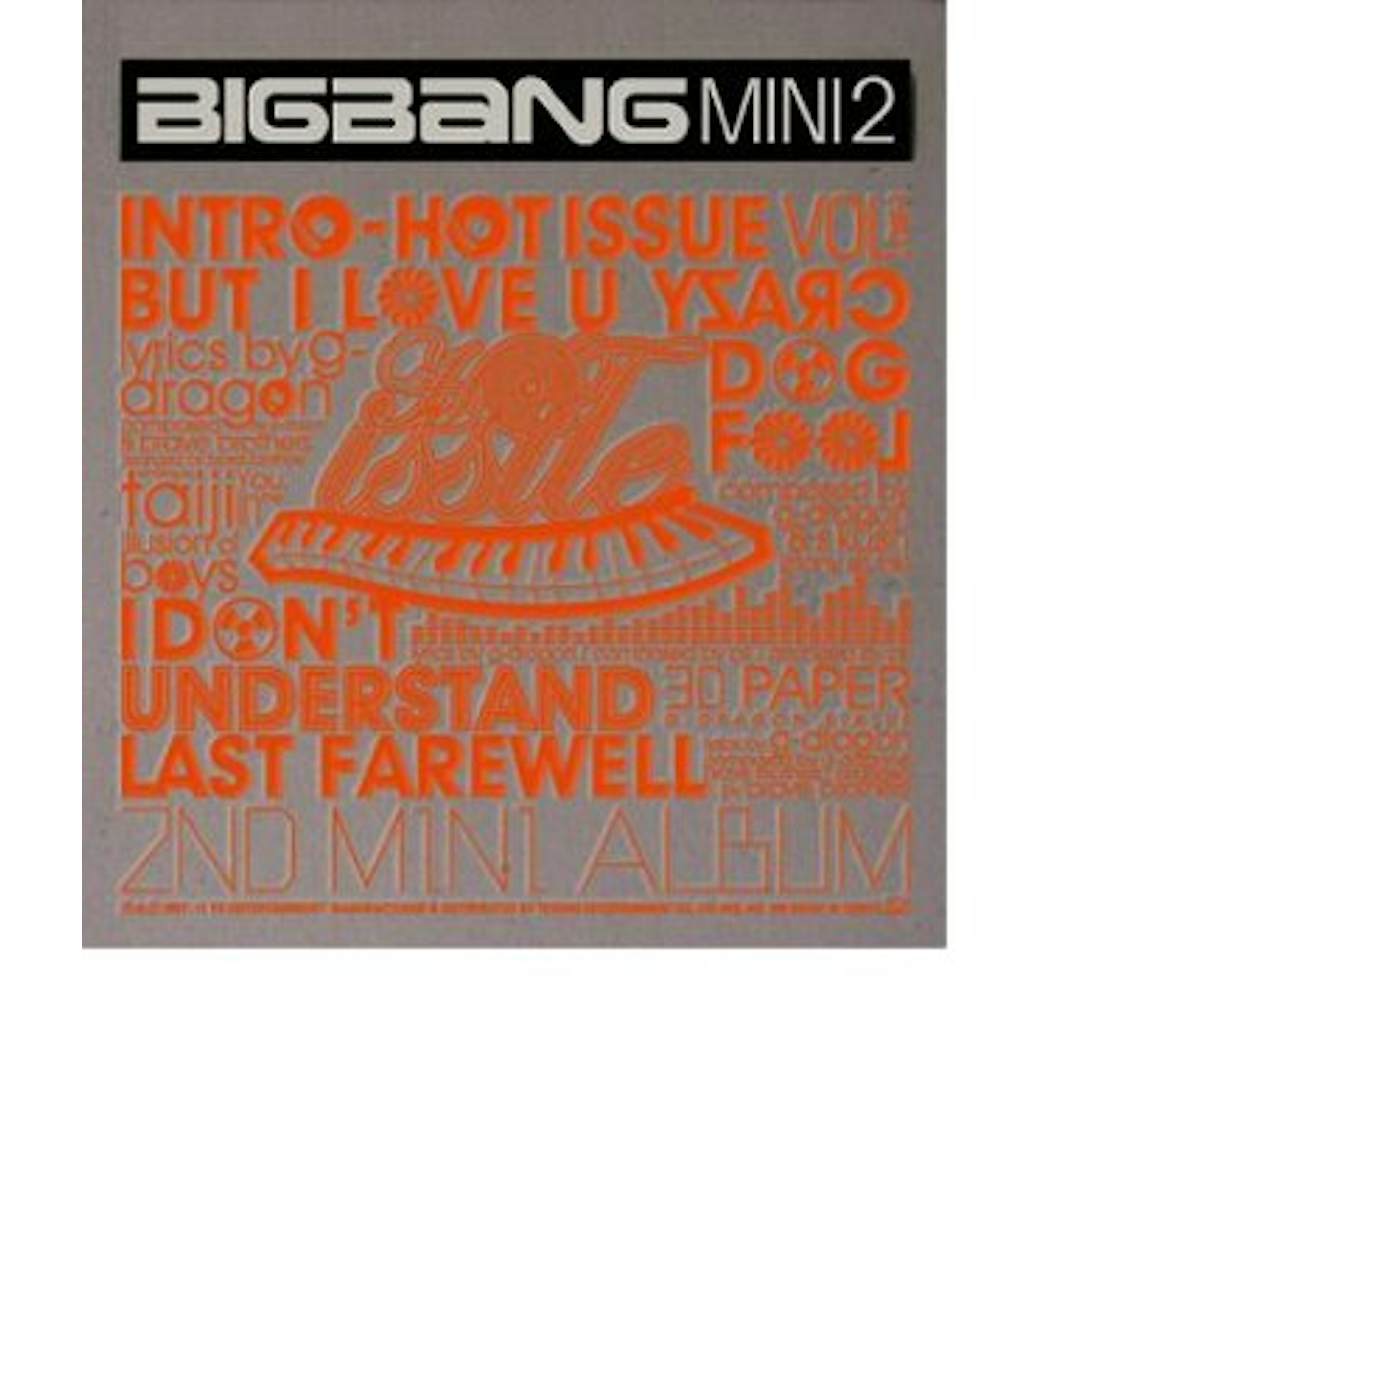 BIGBANG HOT ISSUE CD